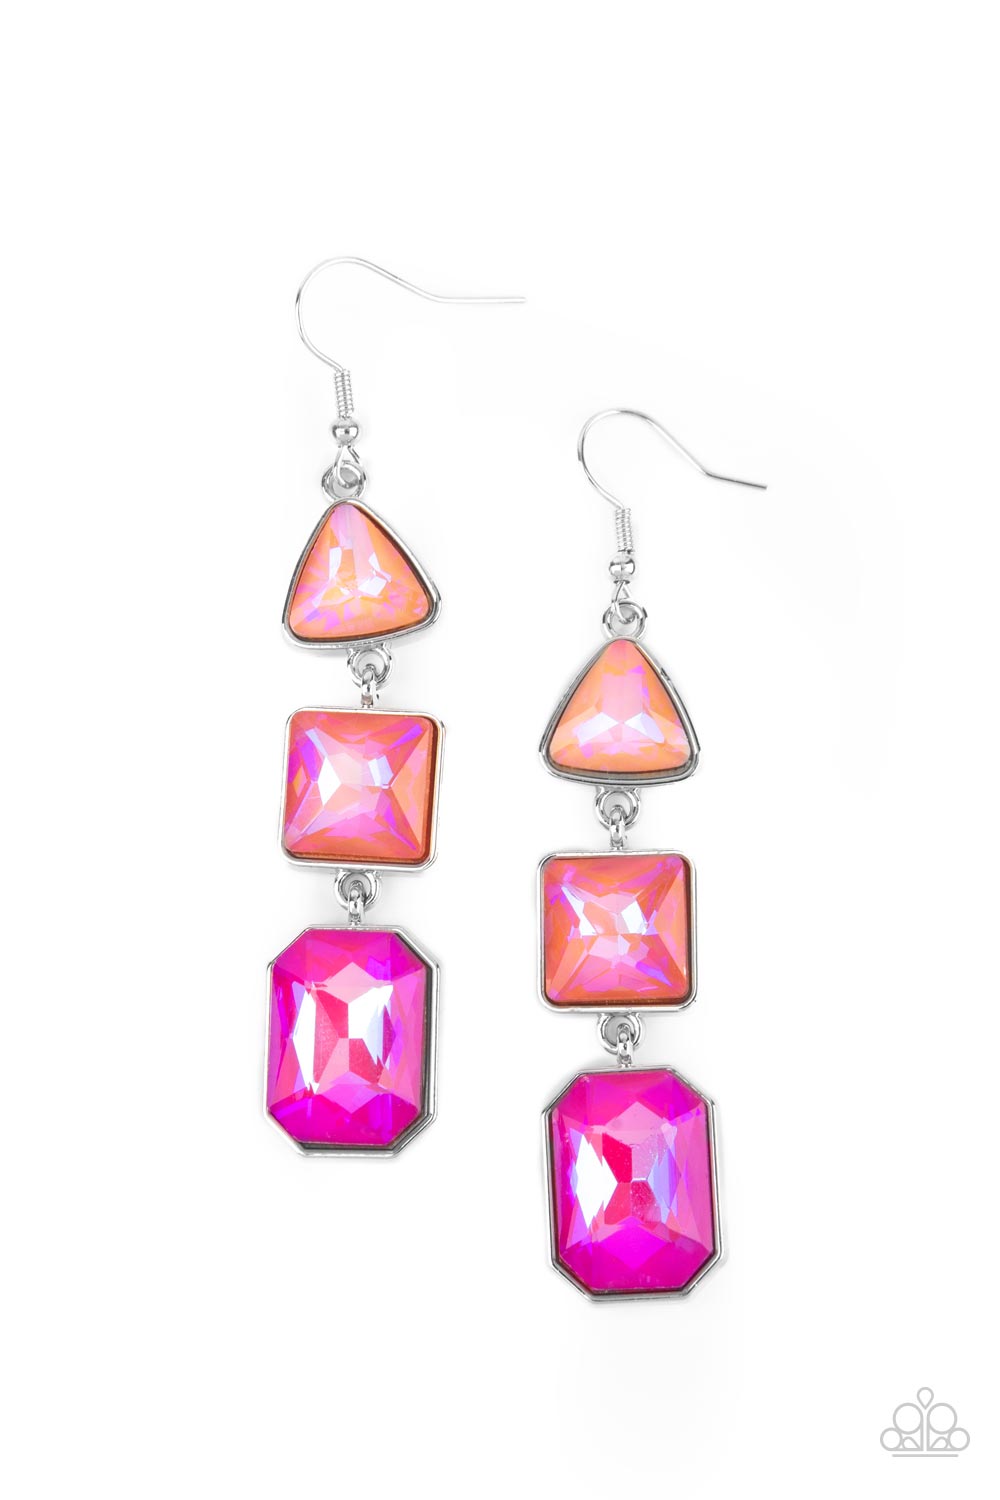 oak-sisters-jewelry-cosmic-culture-pink-earrings-paparazzi-accessories-by-lisa